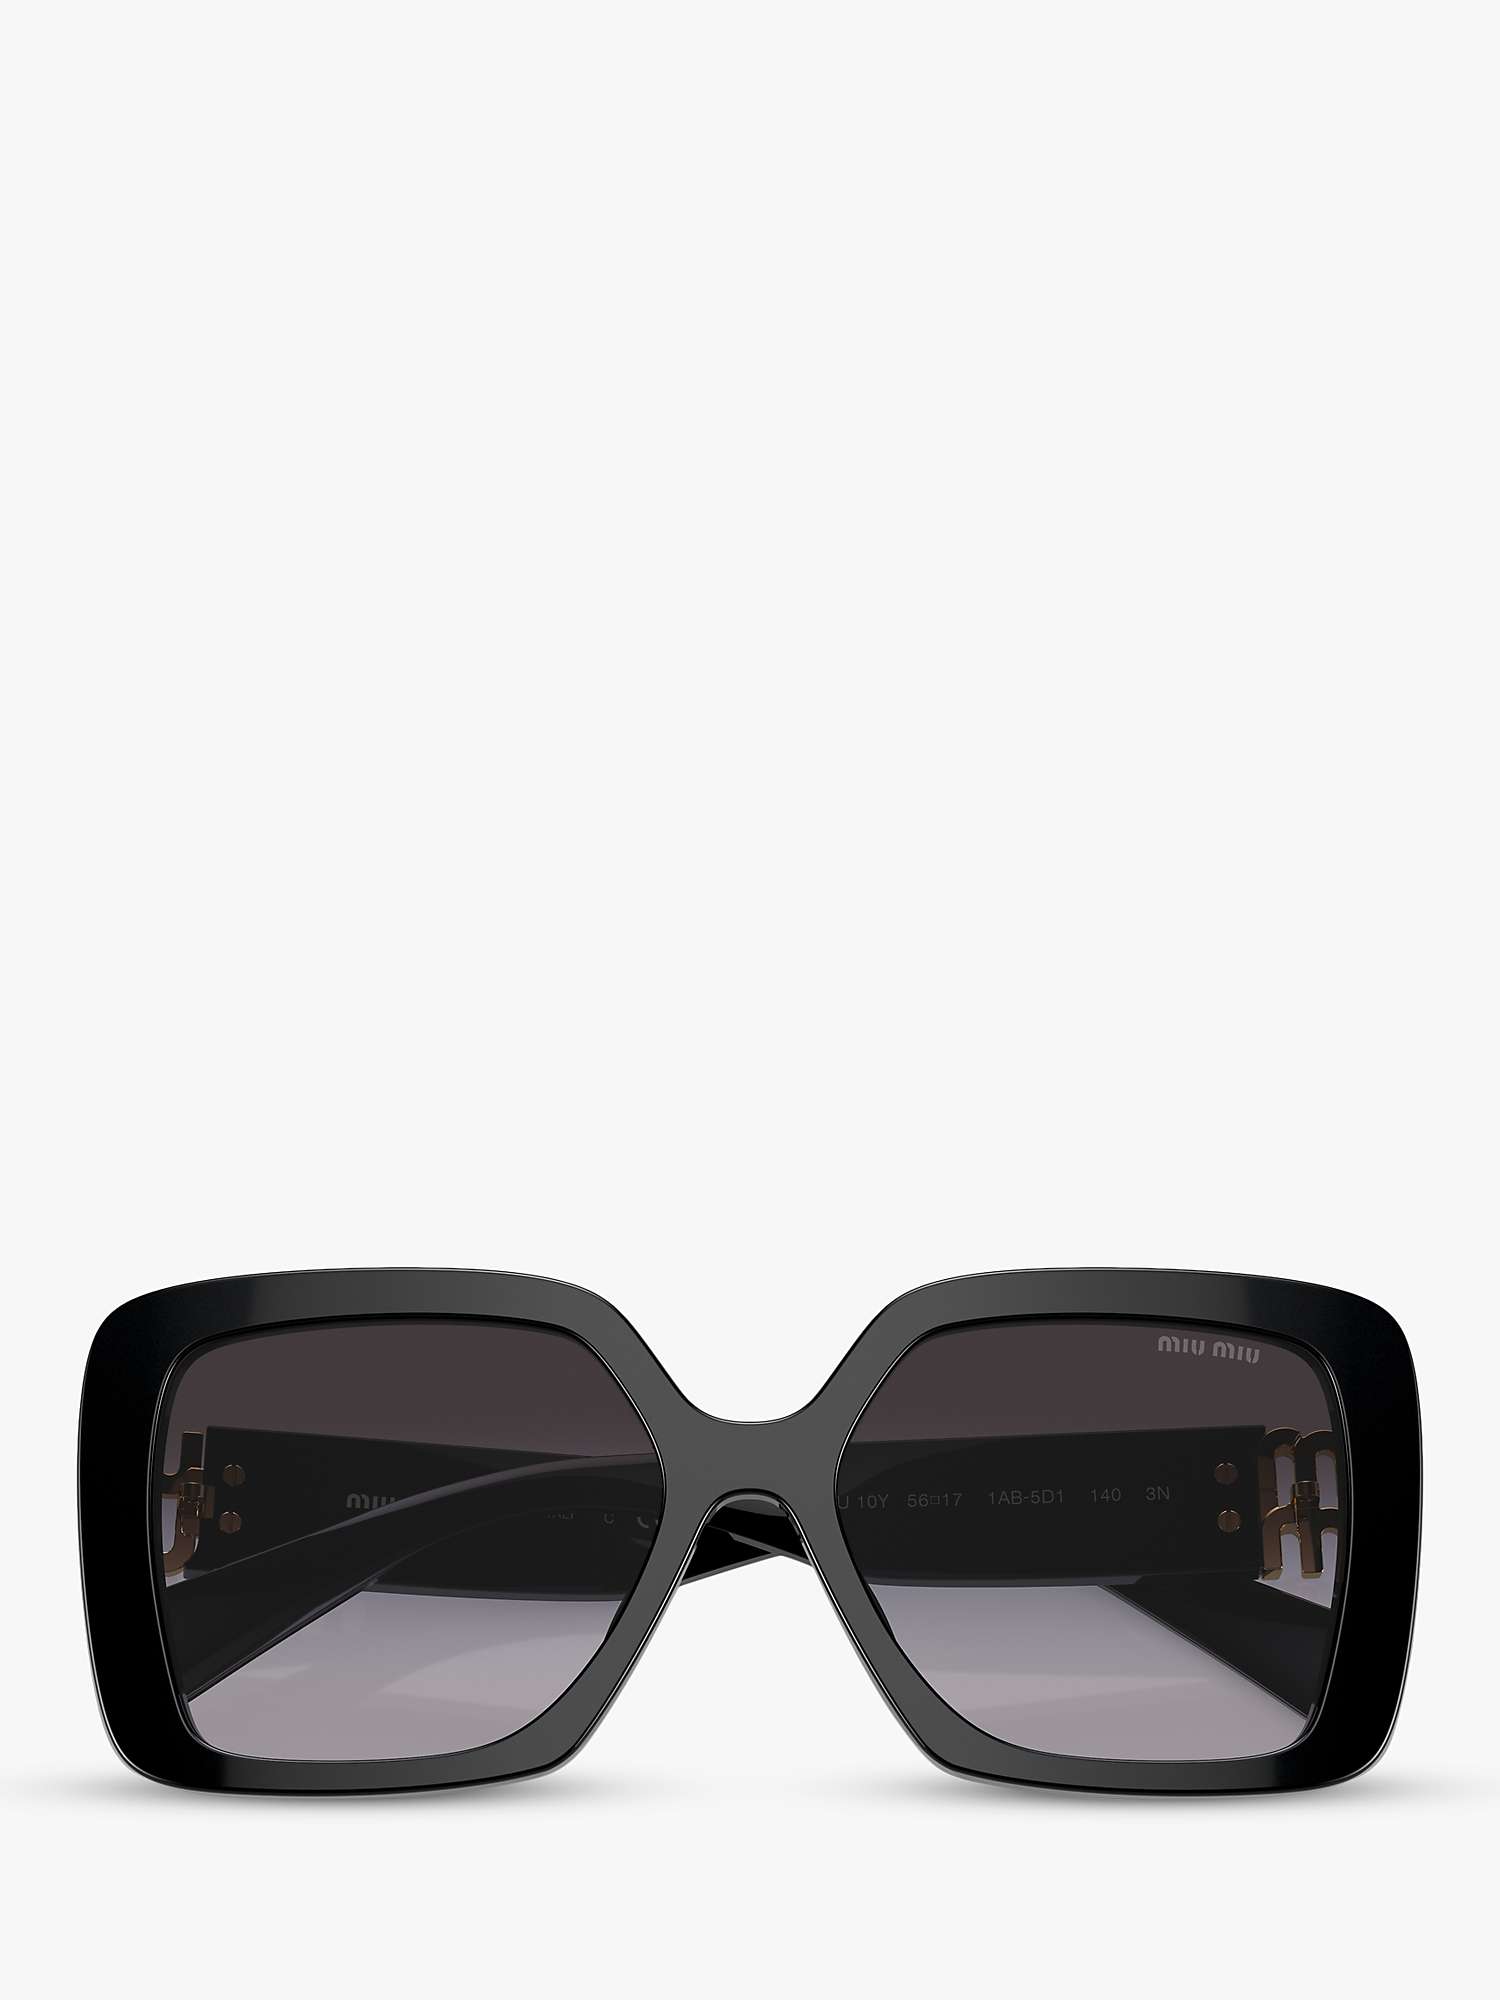 Buy Miu Miu MU10YS8 Women's Rectangular Sunglasses, Black Online at johnlewis.com